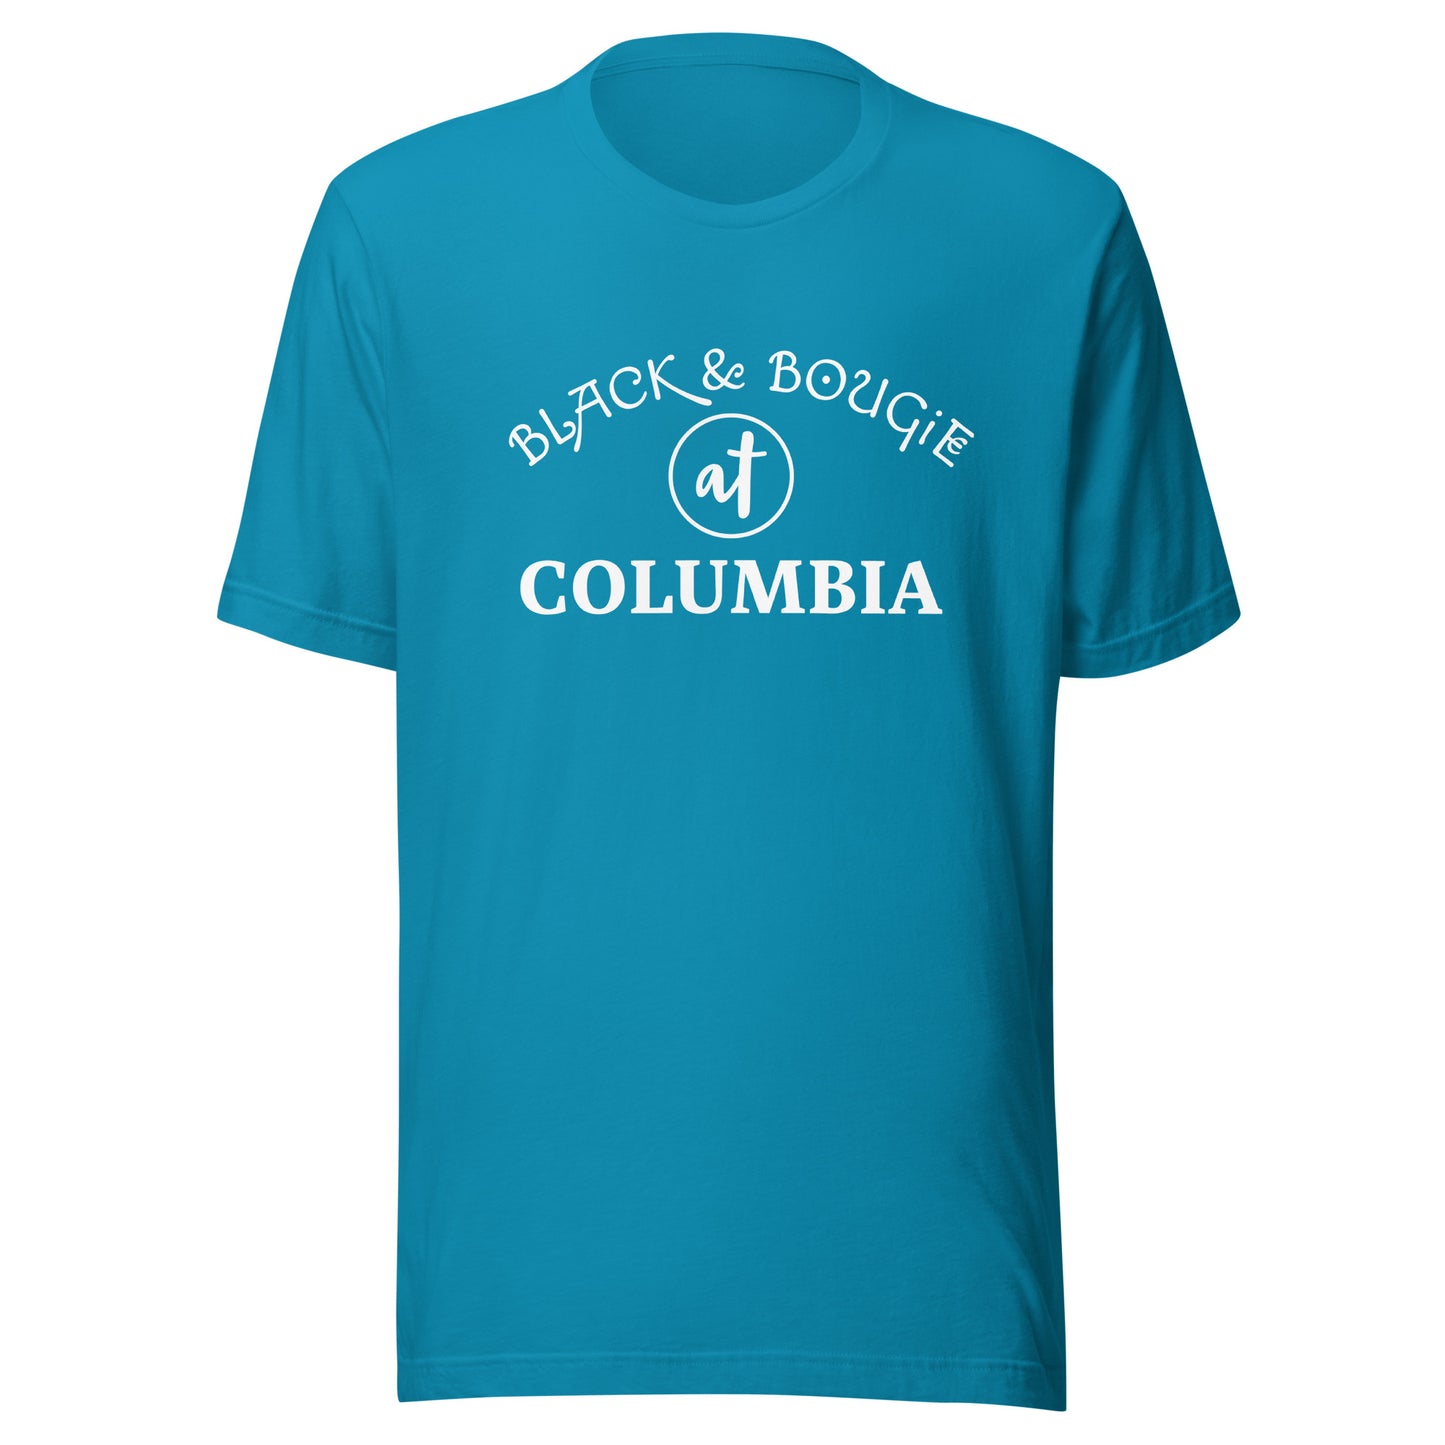 B & B at Columbia - Blue T Shirt